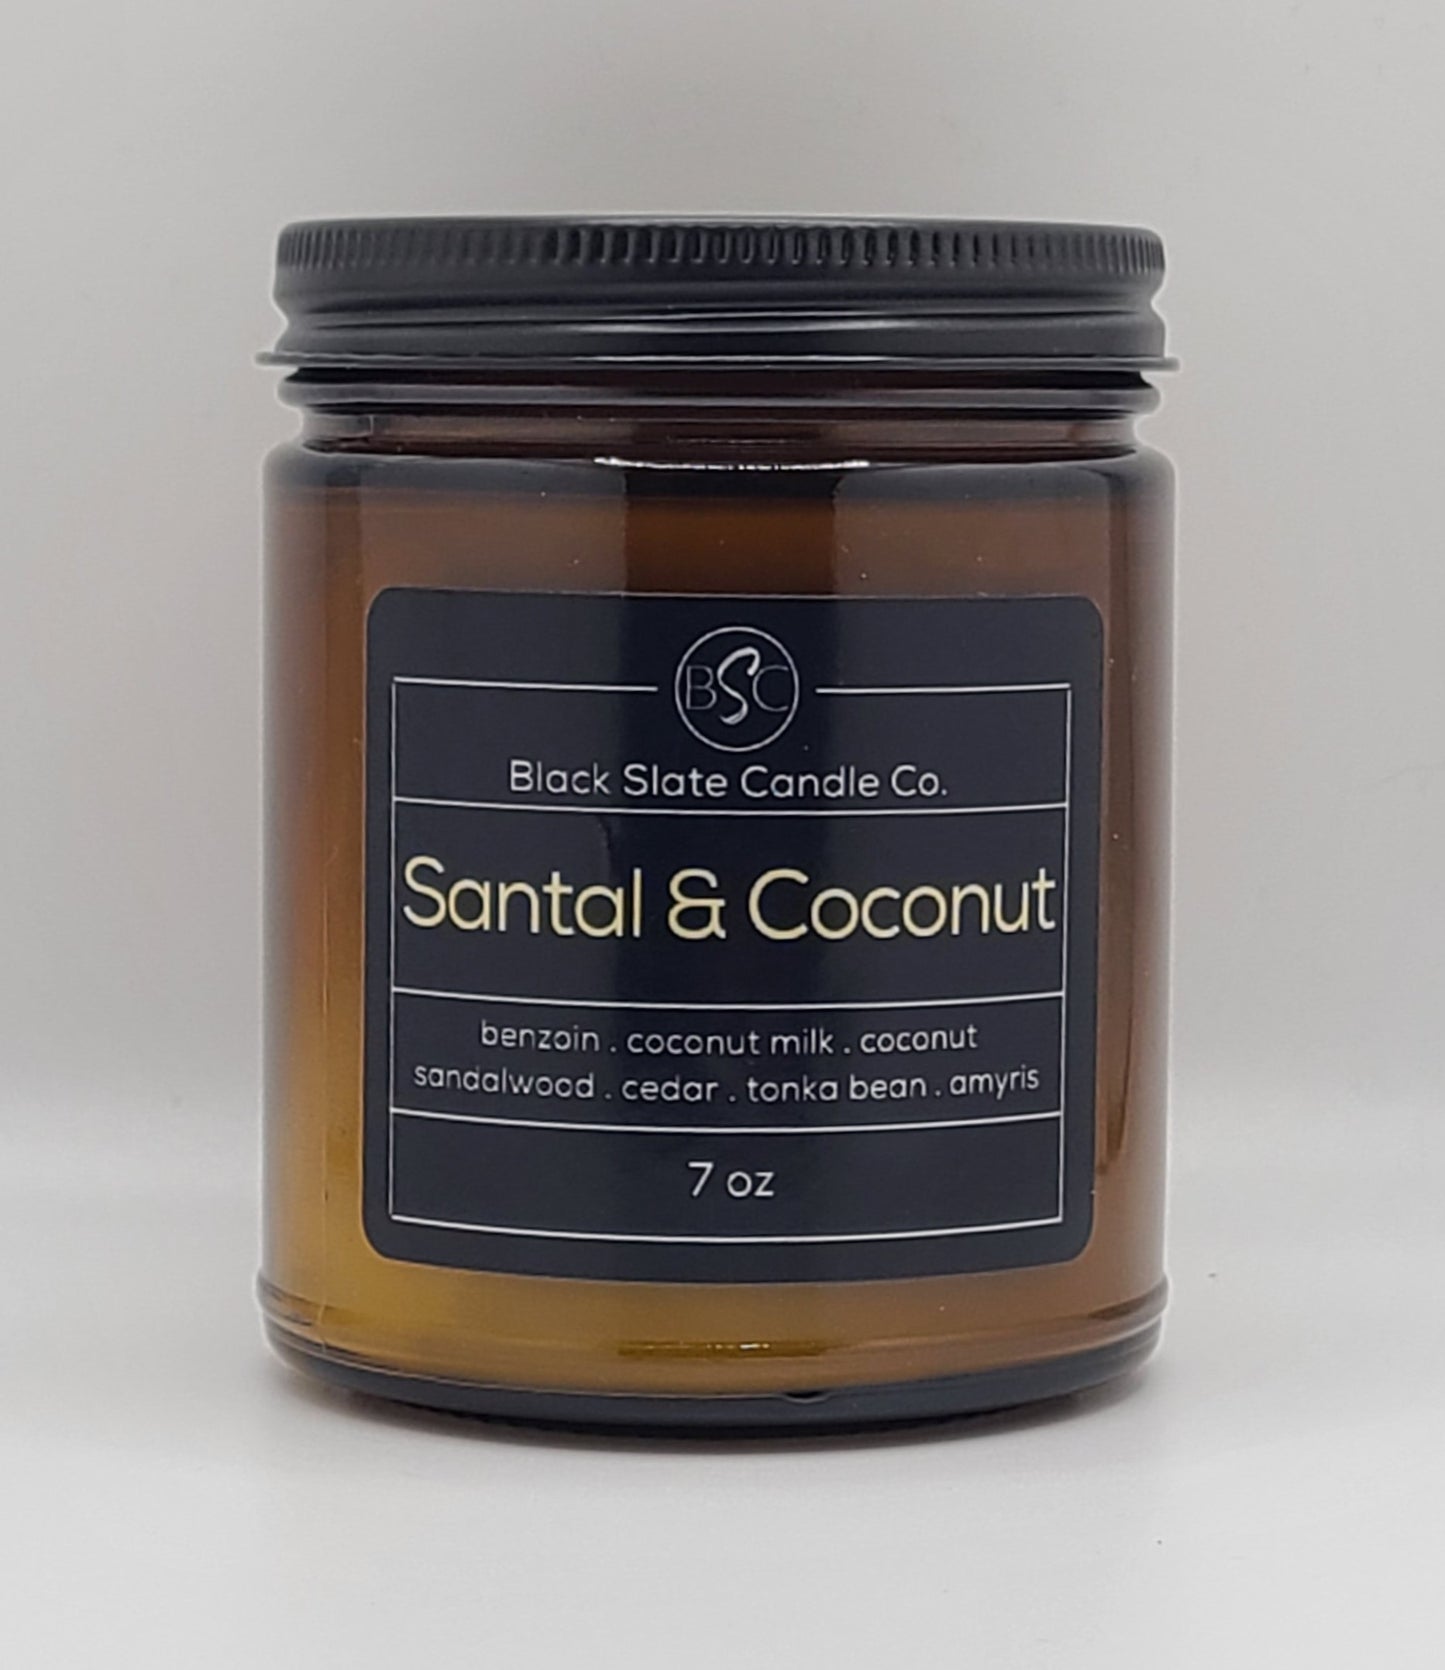 Santal & Coconut